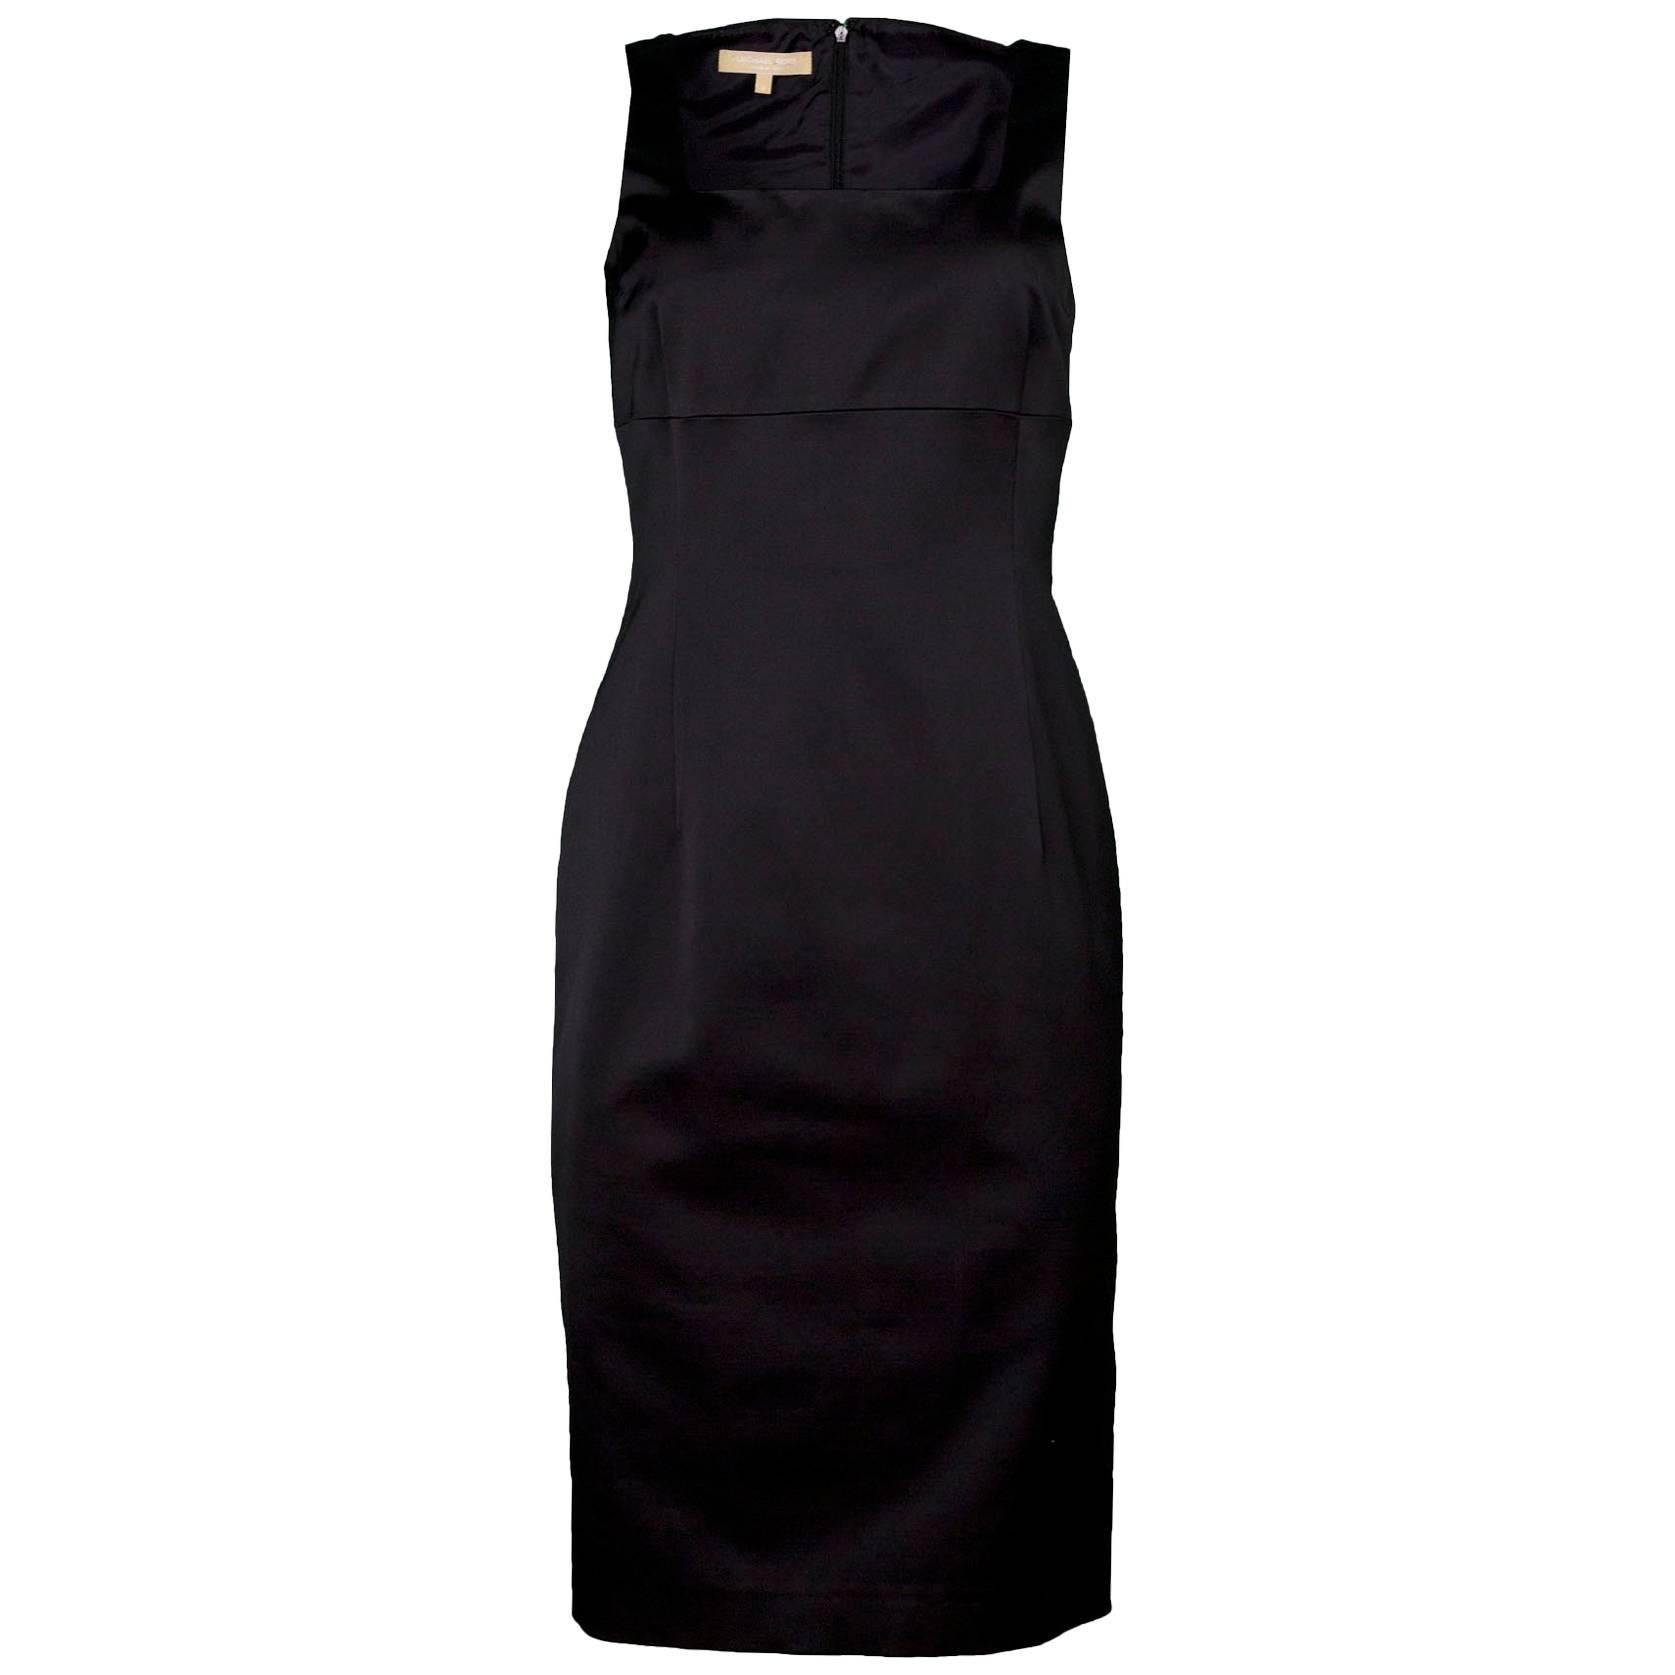 Michael Kors Black Dress Sz 4